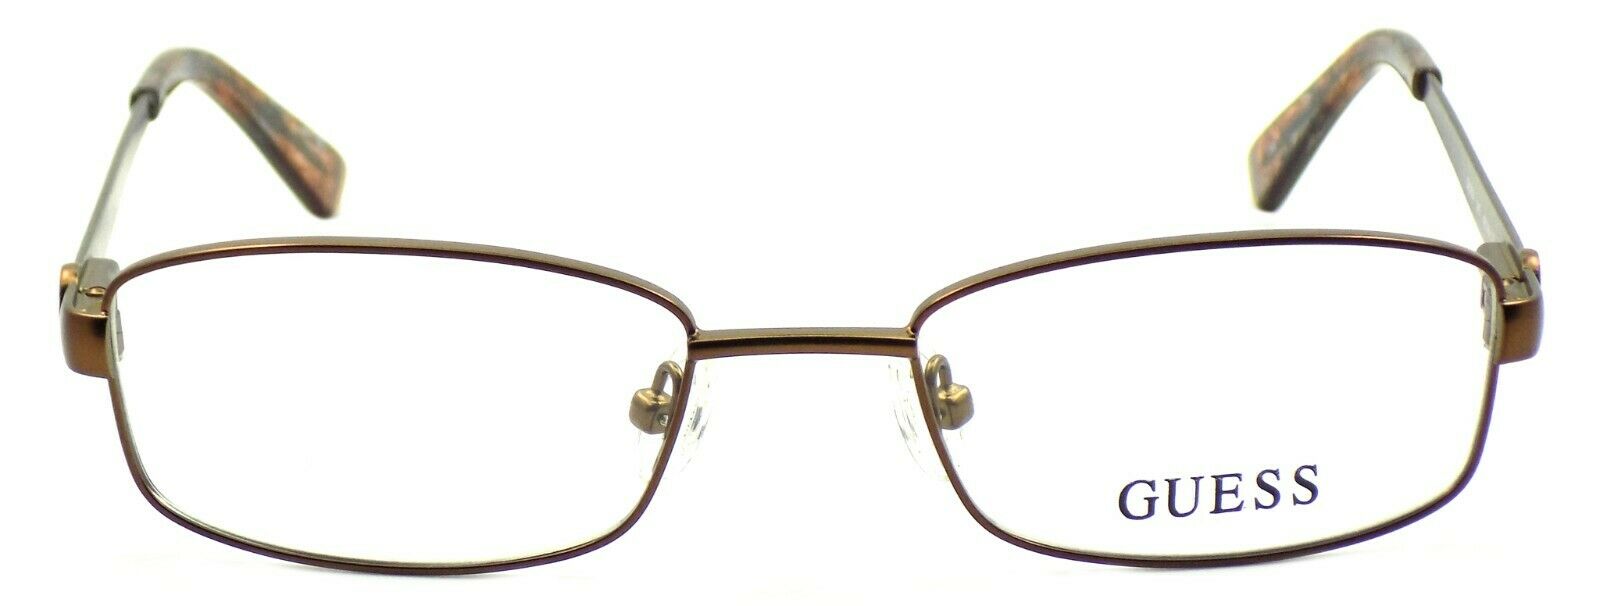 2-GUESS GU2524 049 Women's Eyeglasses Frames Petite 49-18-135 Matte Dark Brown-664689743773-IKSpecs